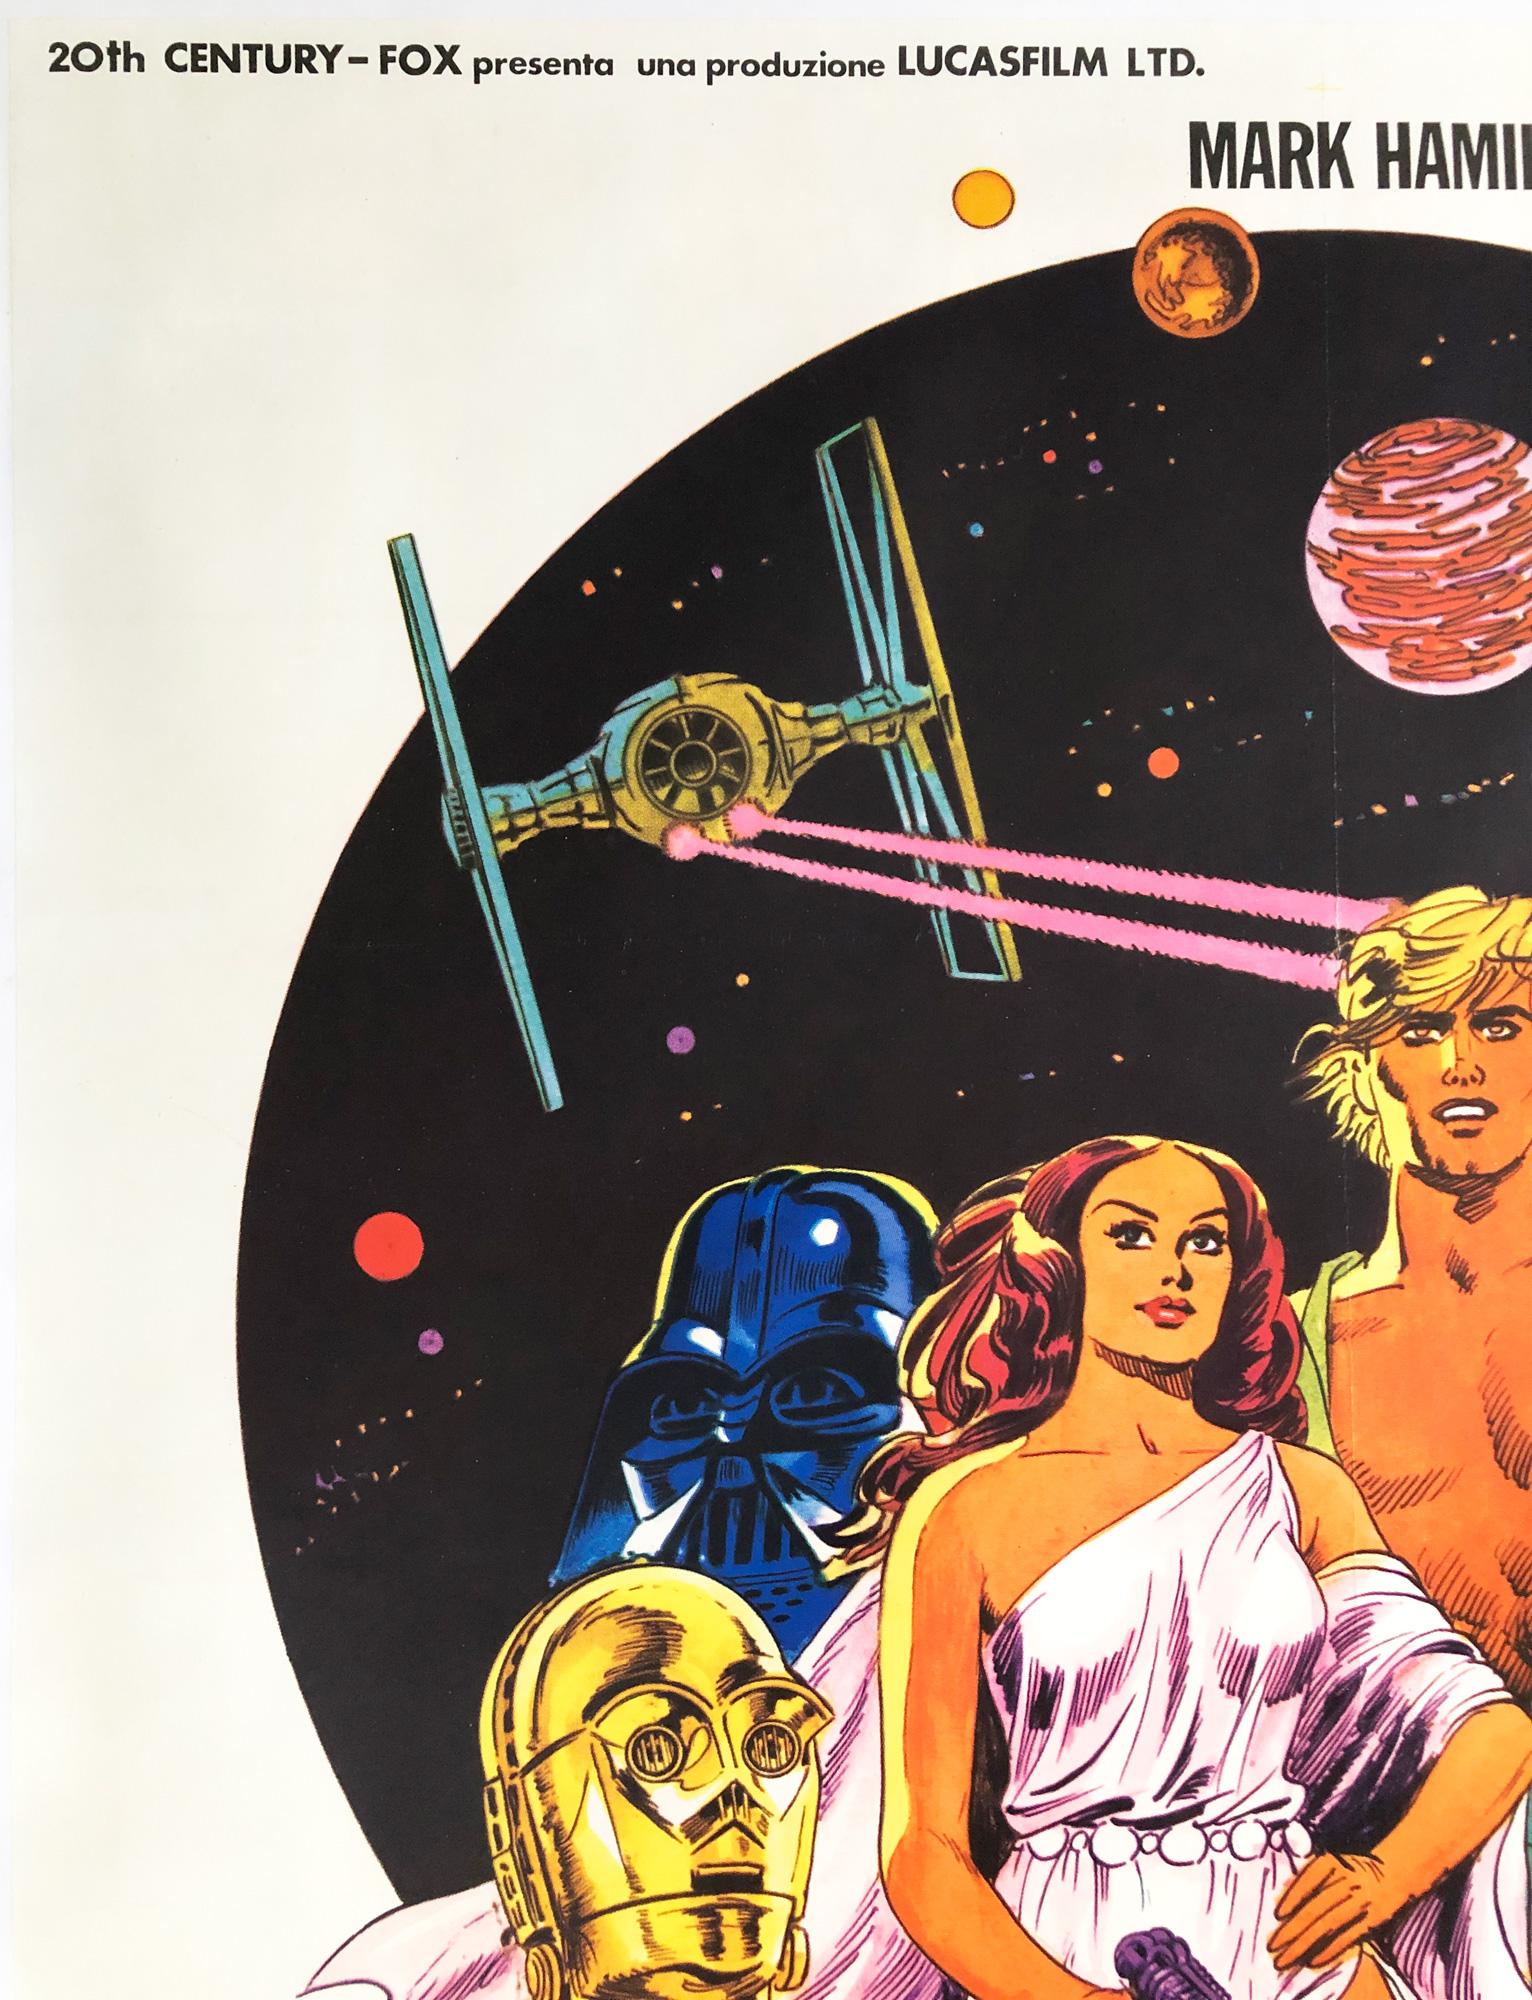 star wars poster 1977